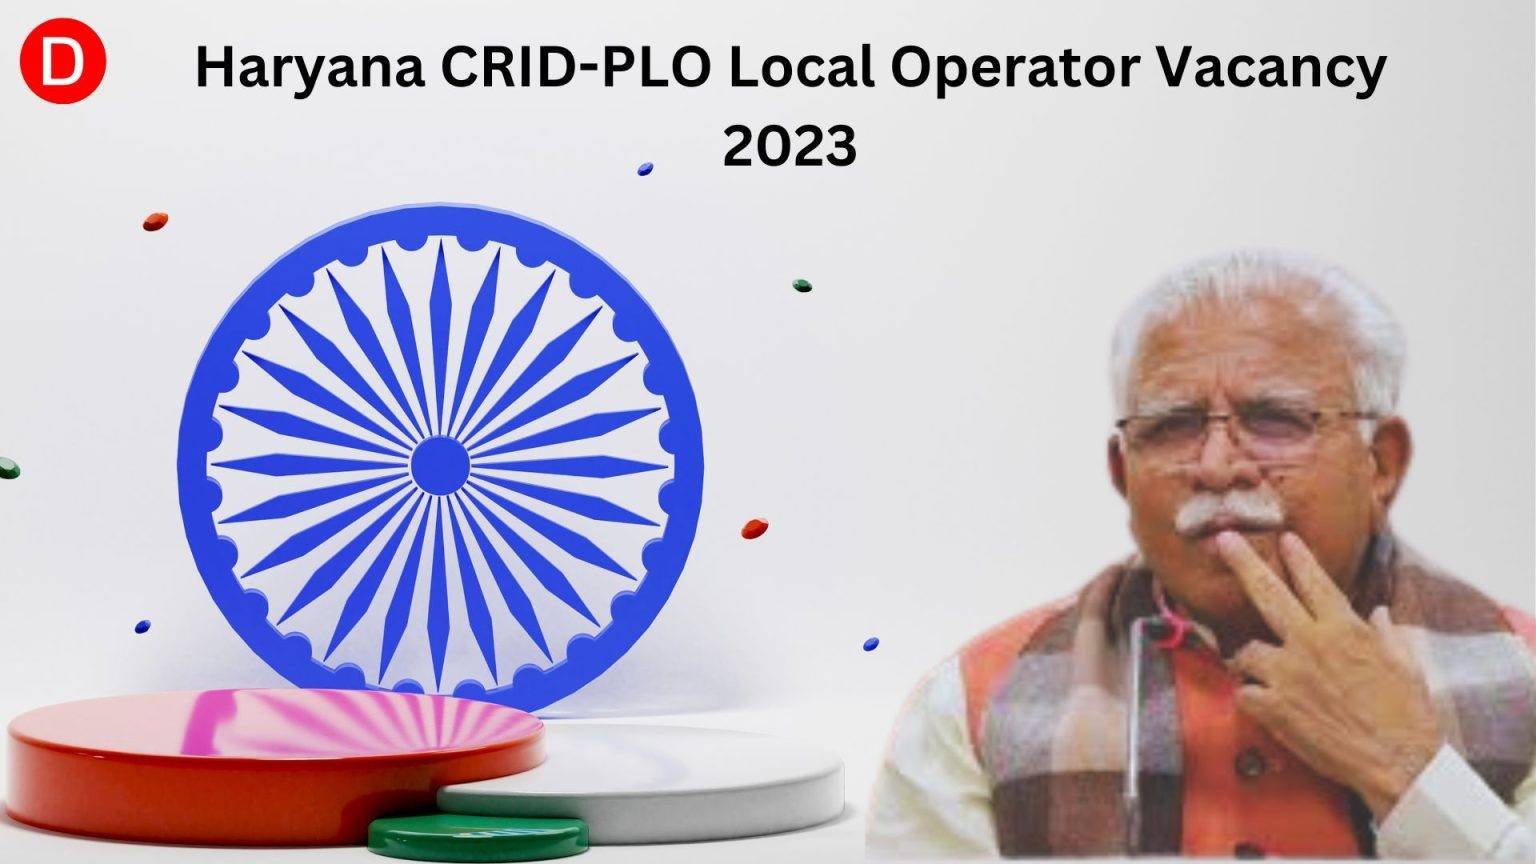 Haryana CRID-PLO Local Operator Vacancy 2023